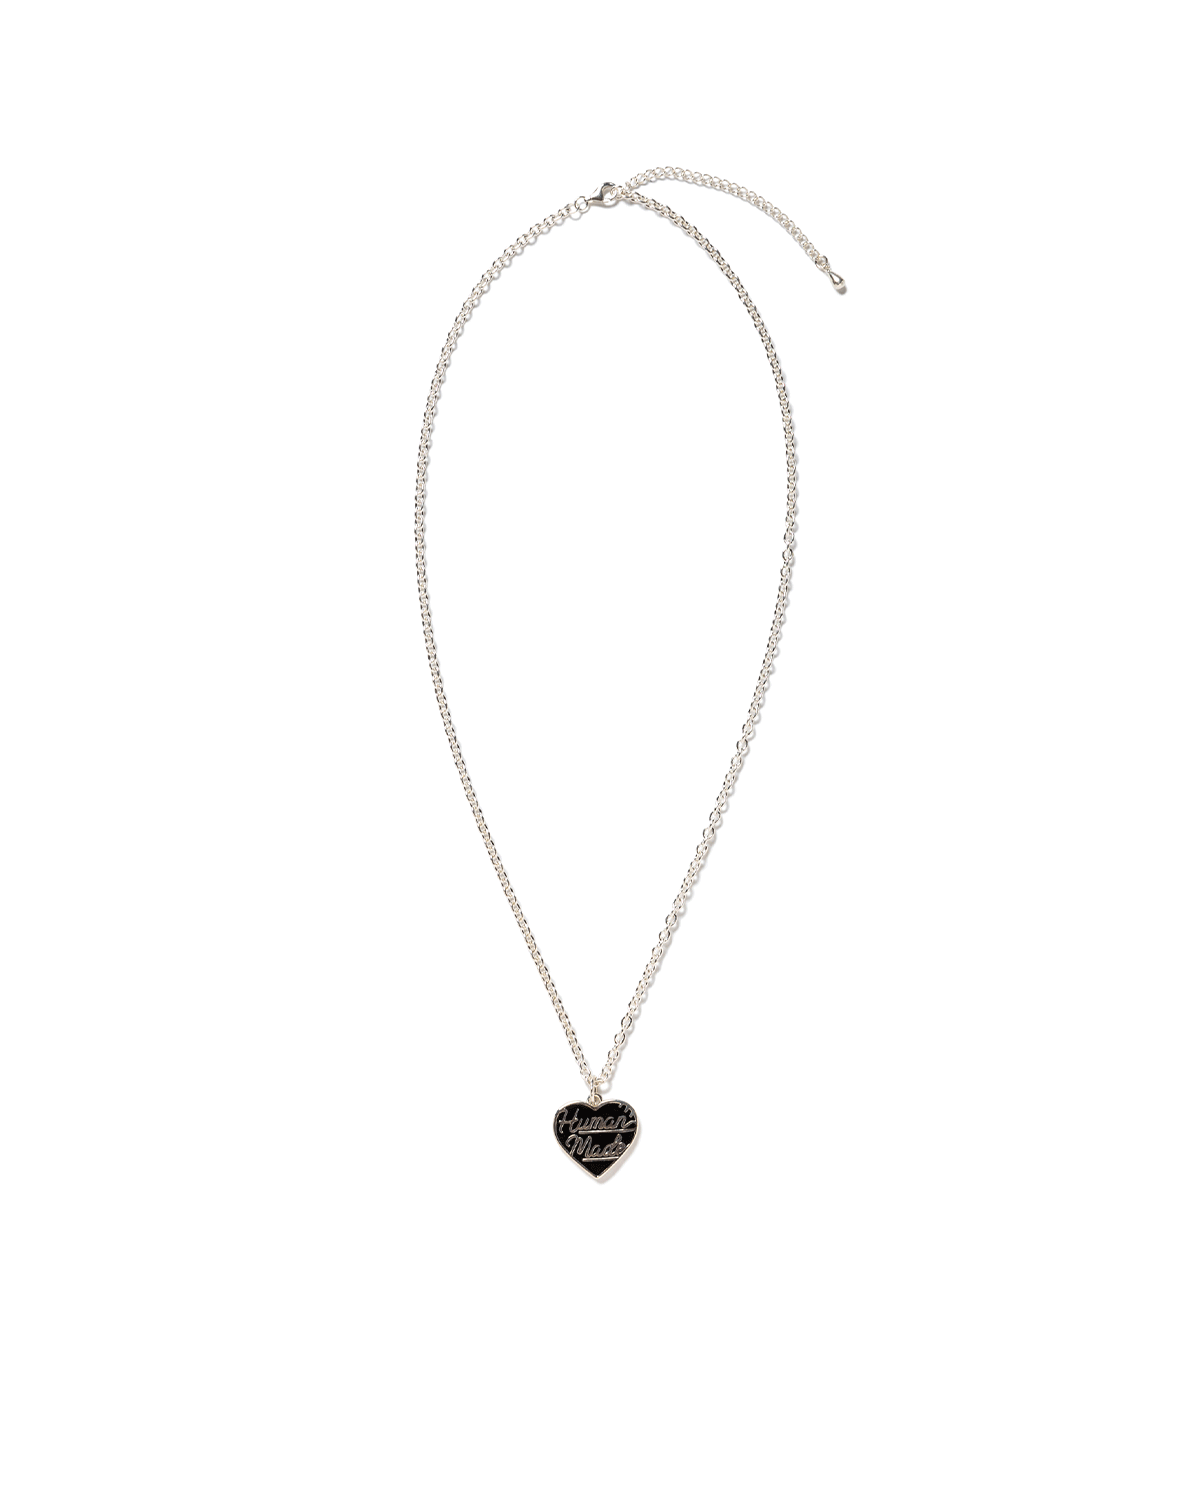 Heart Silver Necklace Black